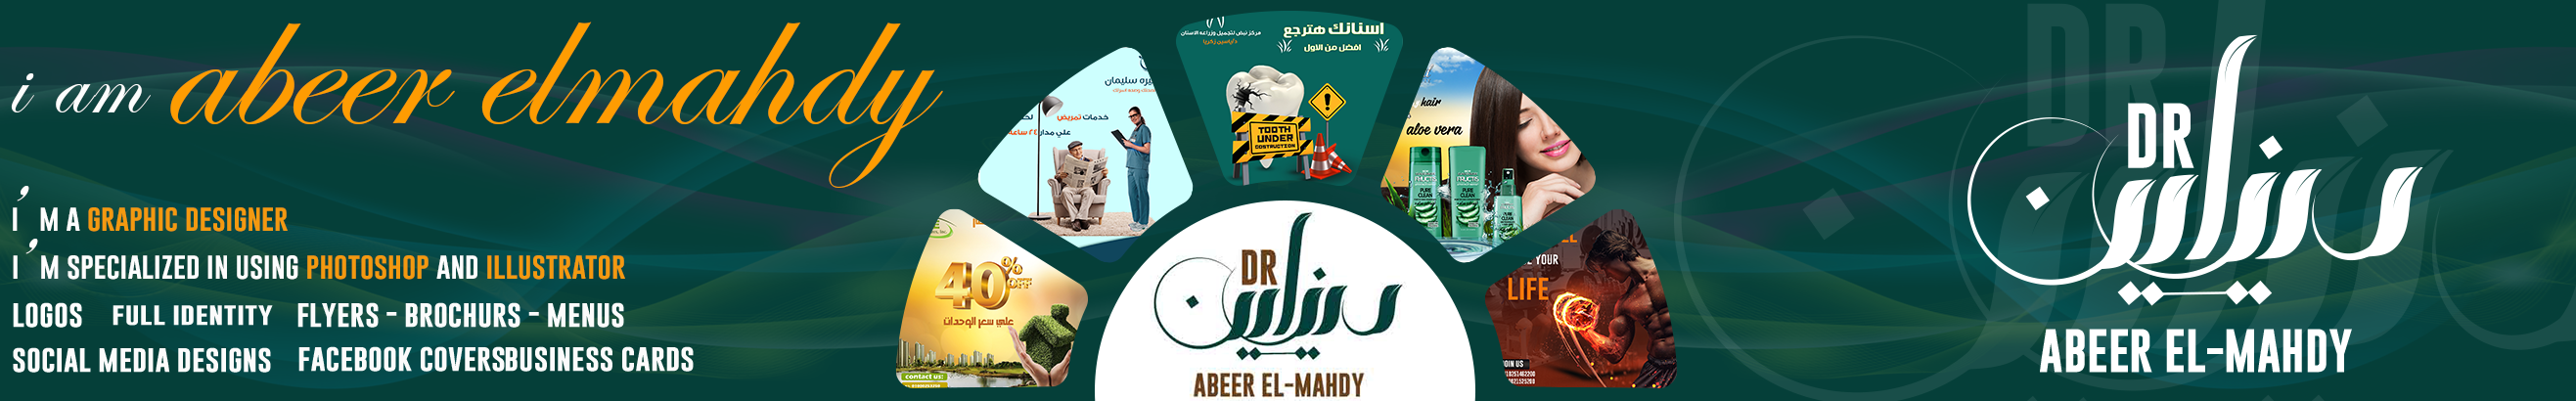 Баннер профиля Abeer Elmahdy